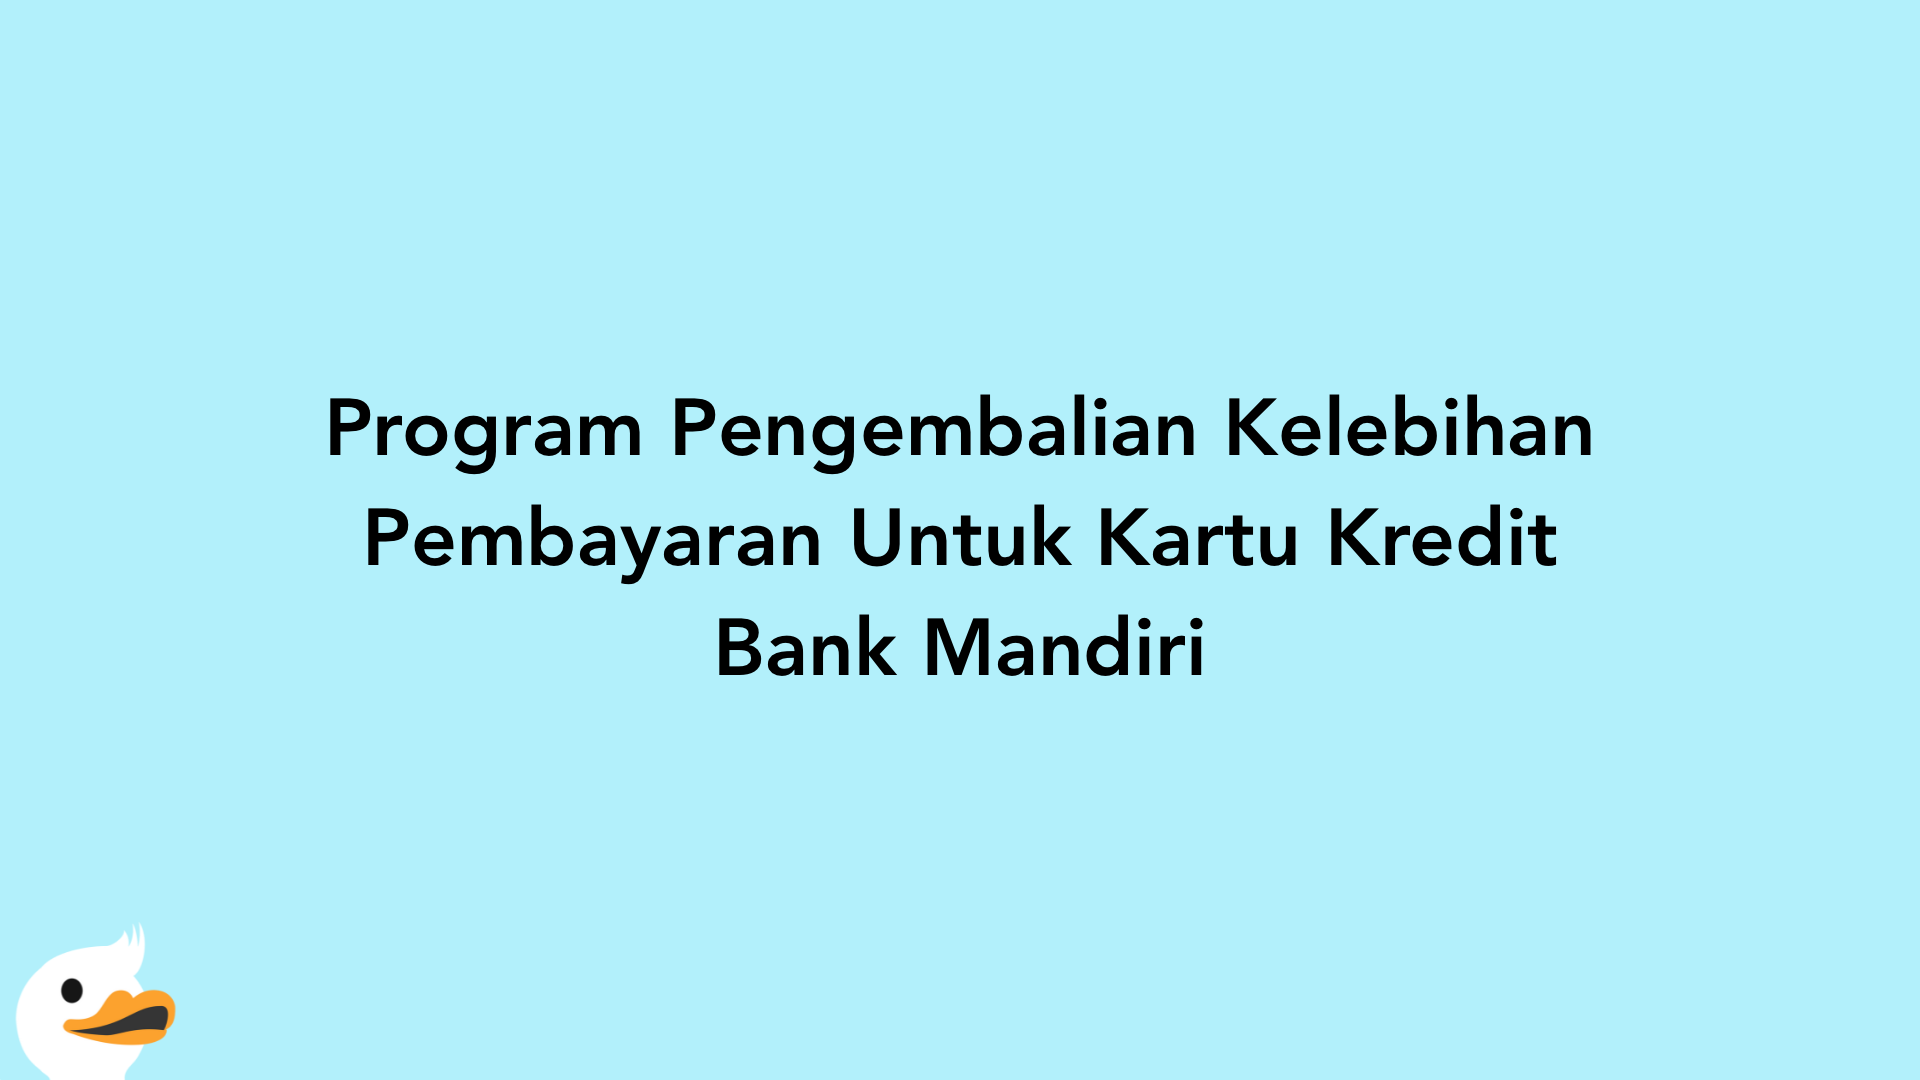 Program Pengembalian Kelebihan Pembayaran Untuk Kartu Kredit Bank Mandiri